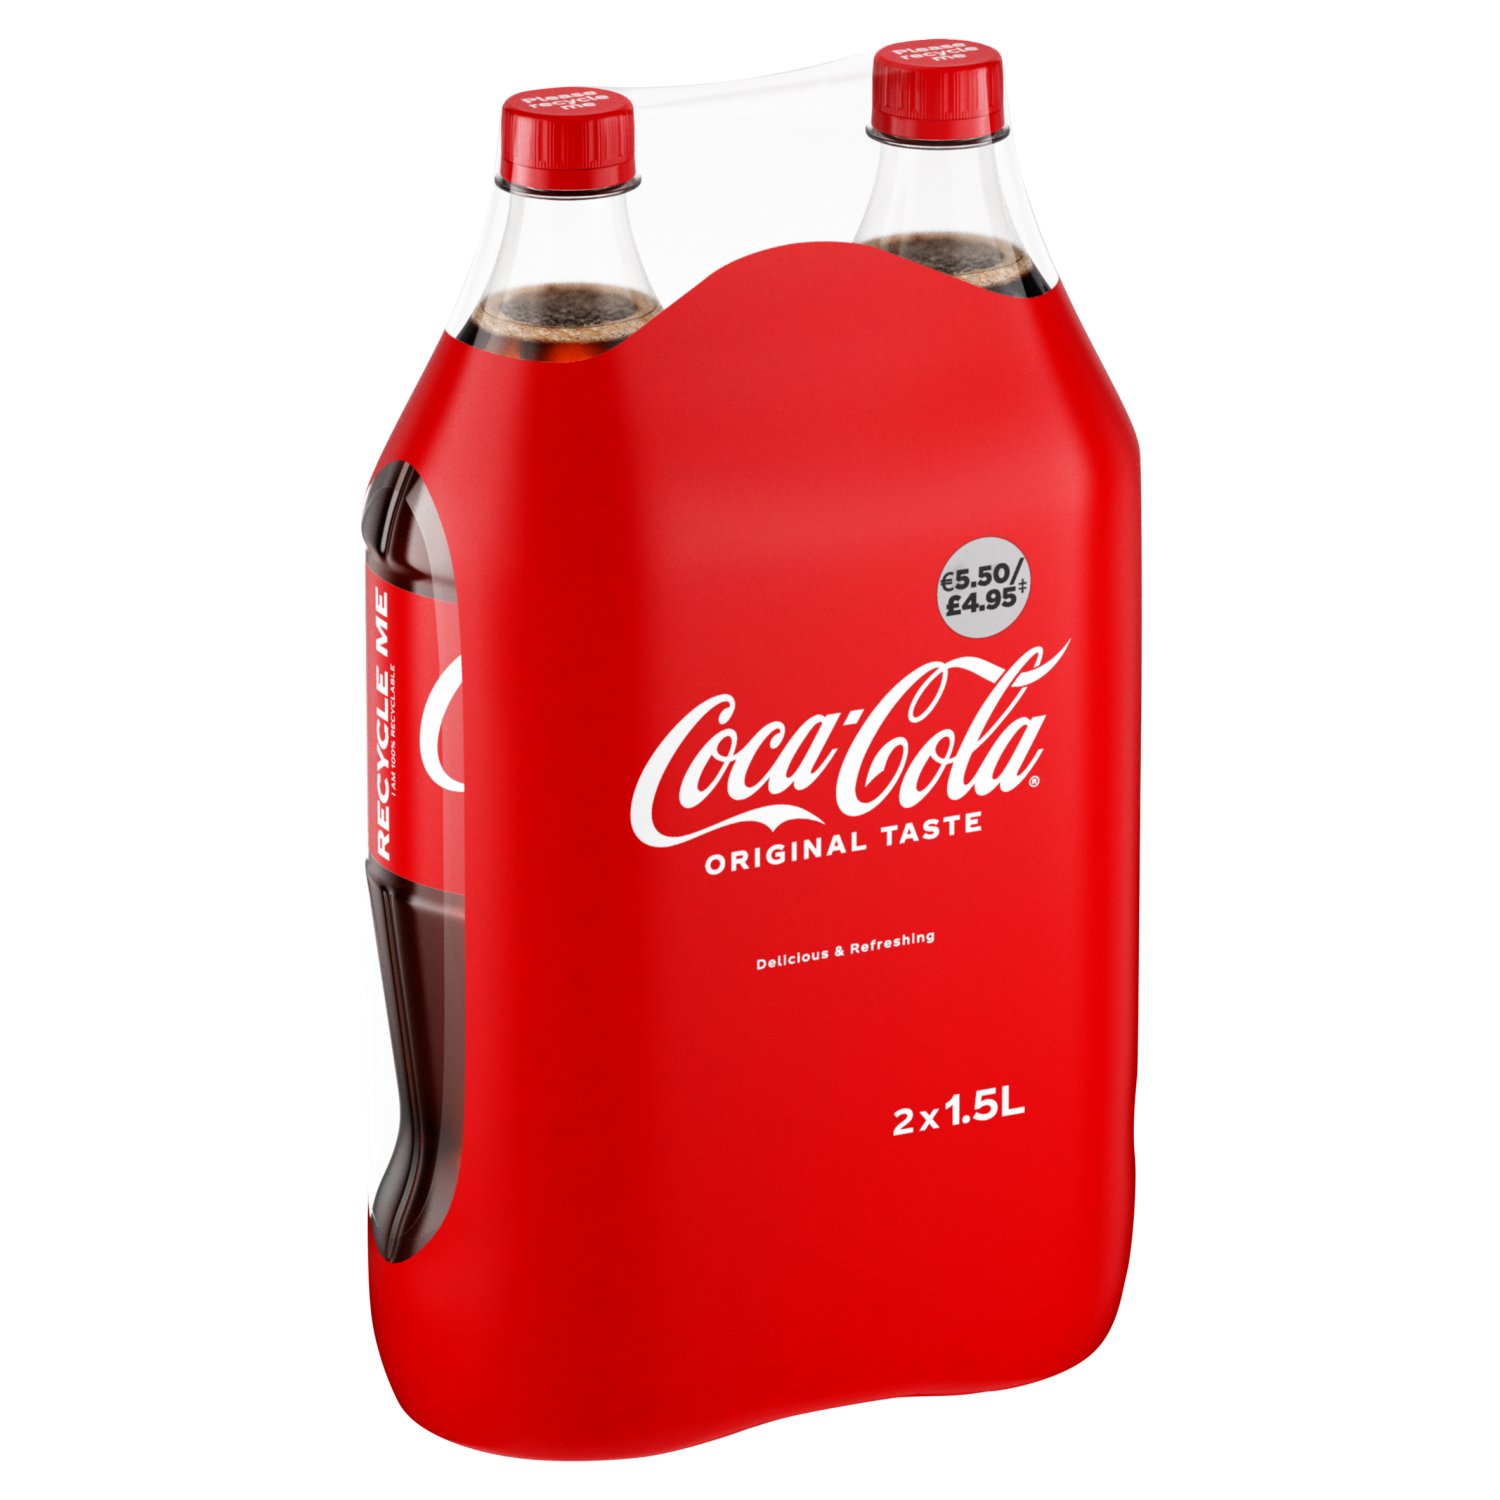 Coca Cola Pm €5.50 Twin Pack Pet (1.5 L)